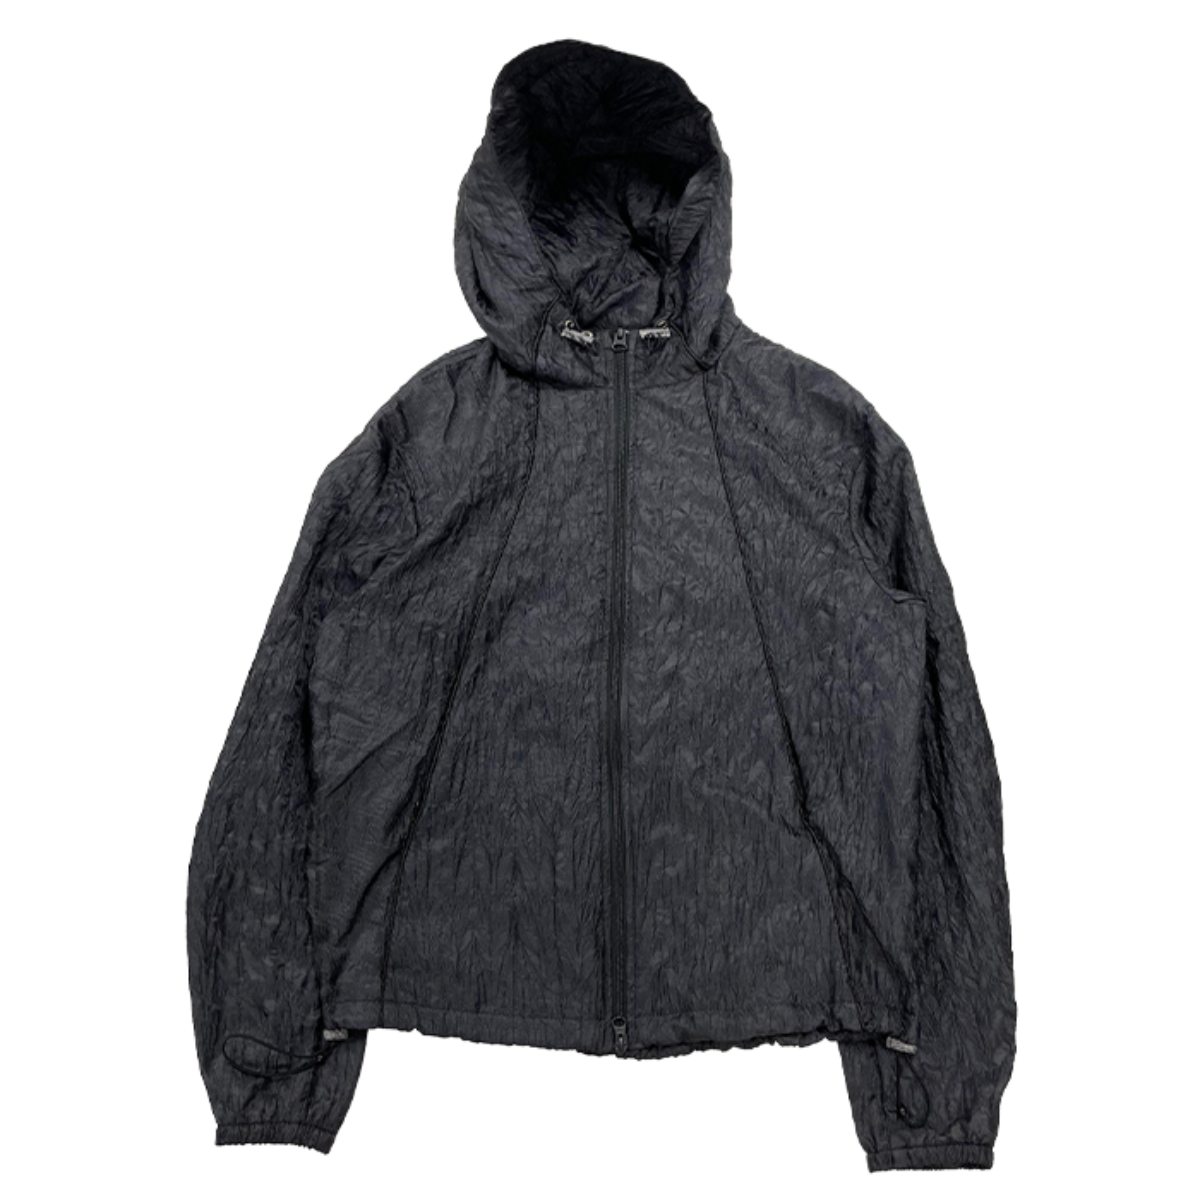 TCM double fabric windstopper jacket (black)